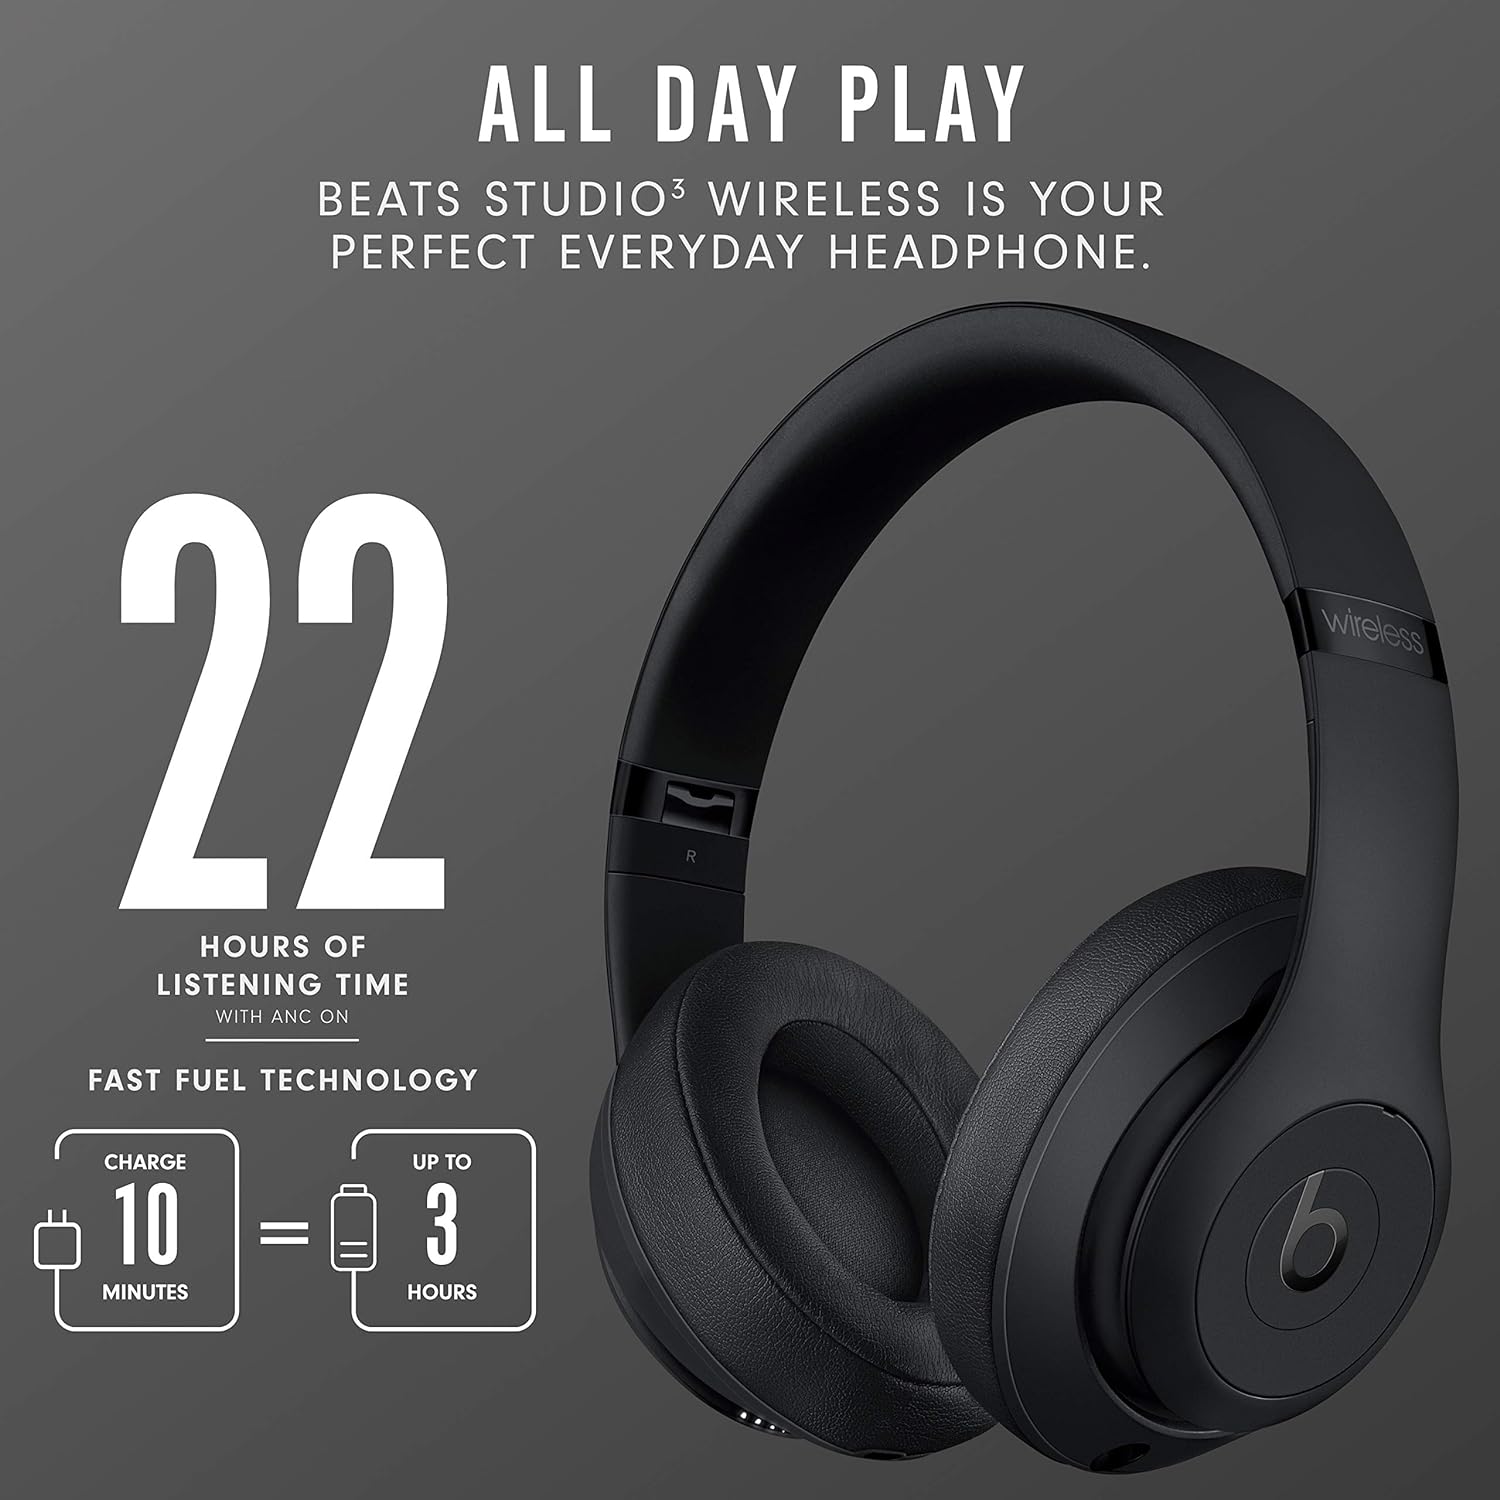 Beats Studio3 Wireless Noise Cancelling Over-Ear Headphones - Apple's W1 chip technology 0190199312722